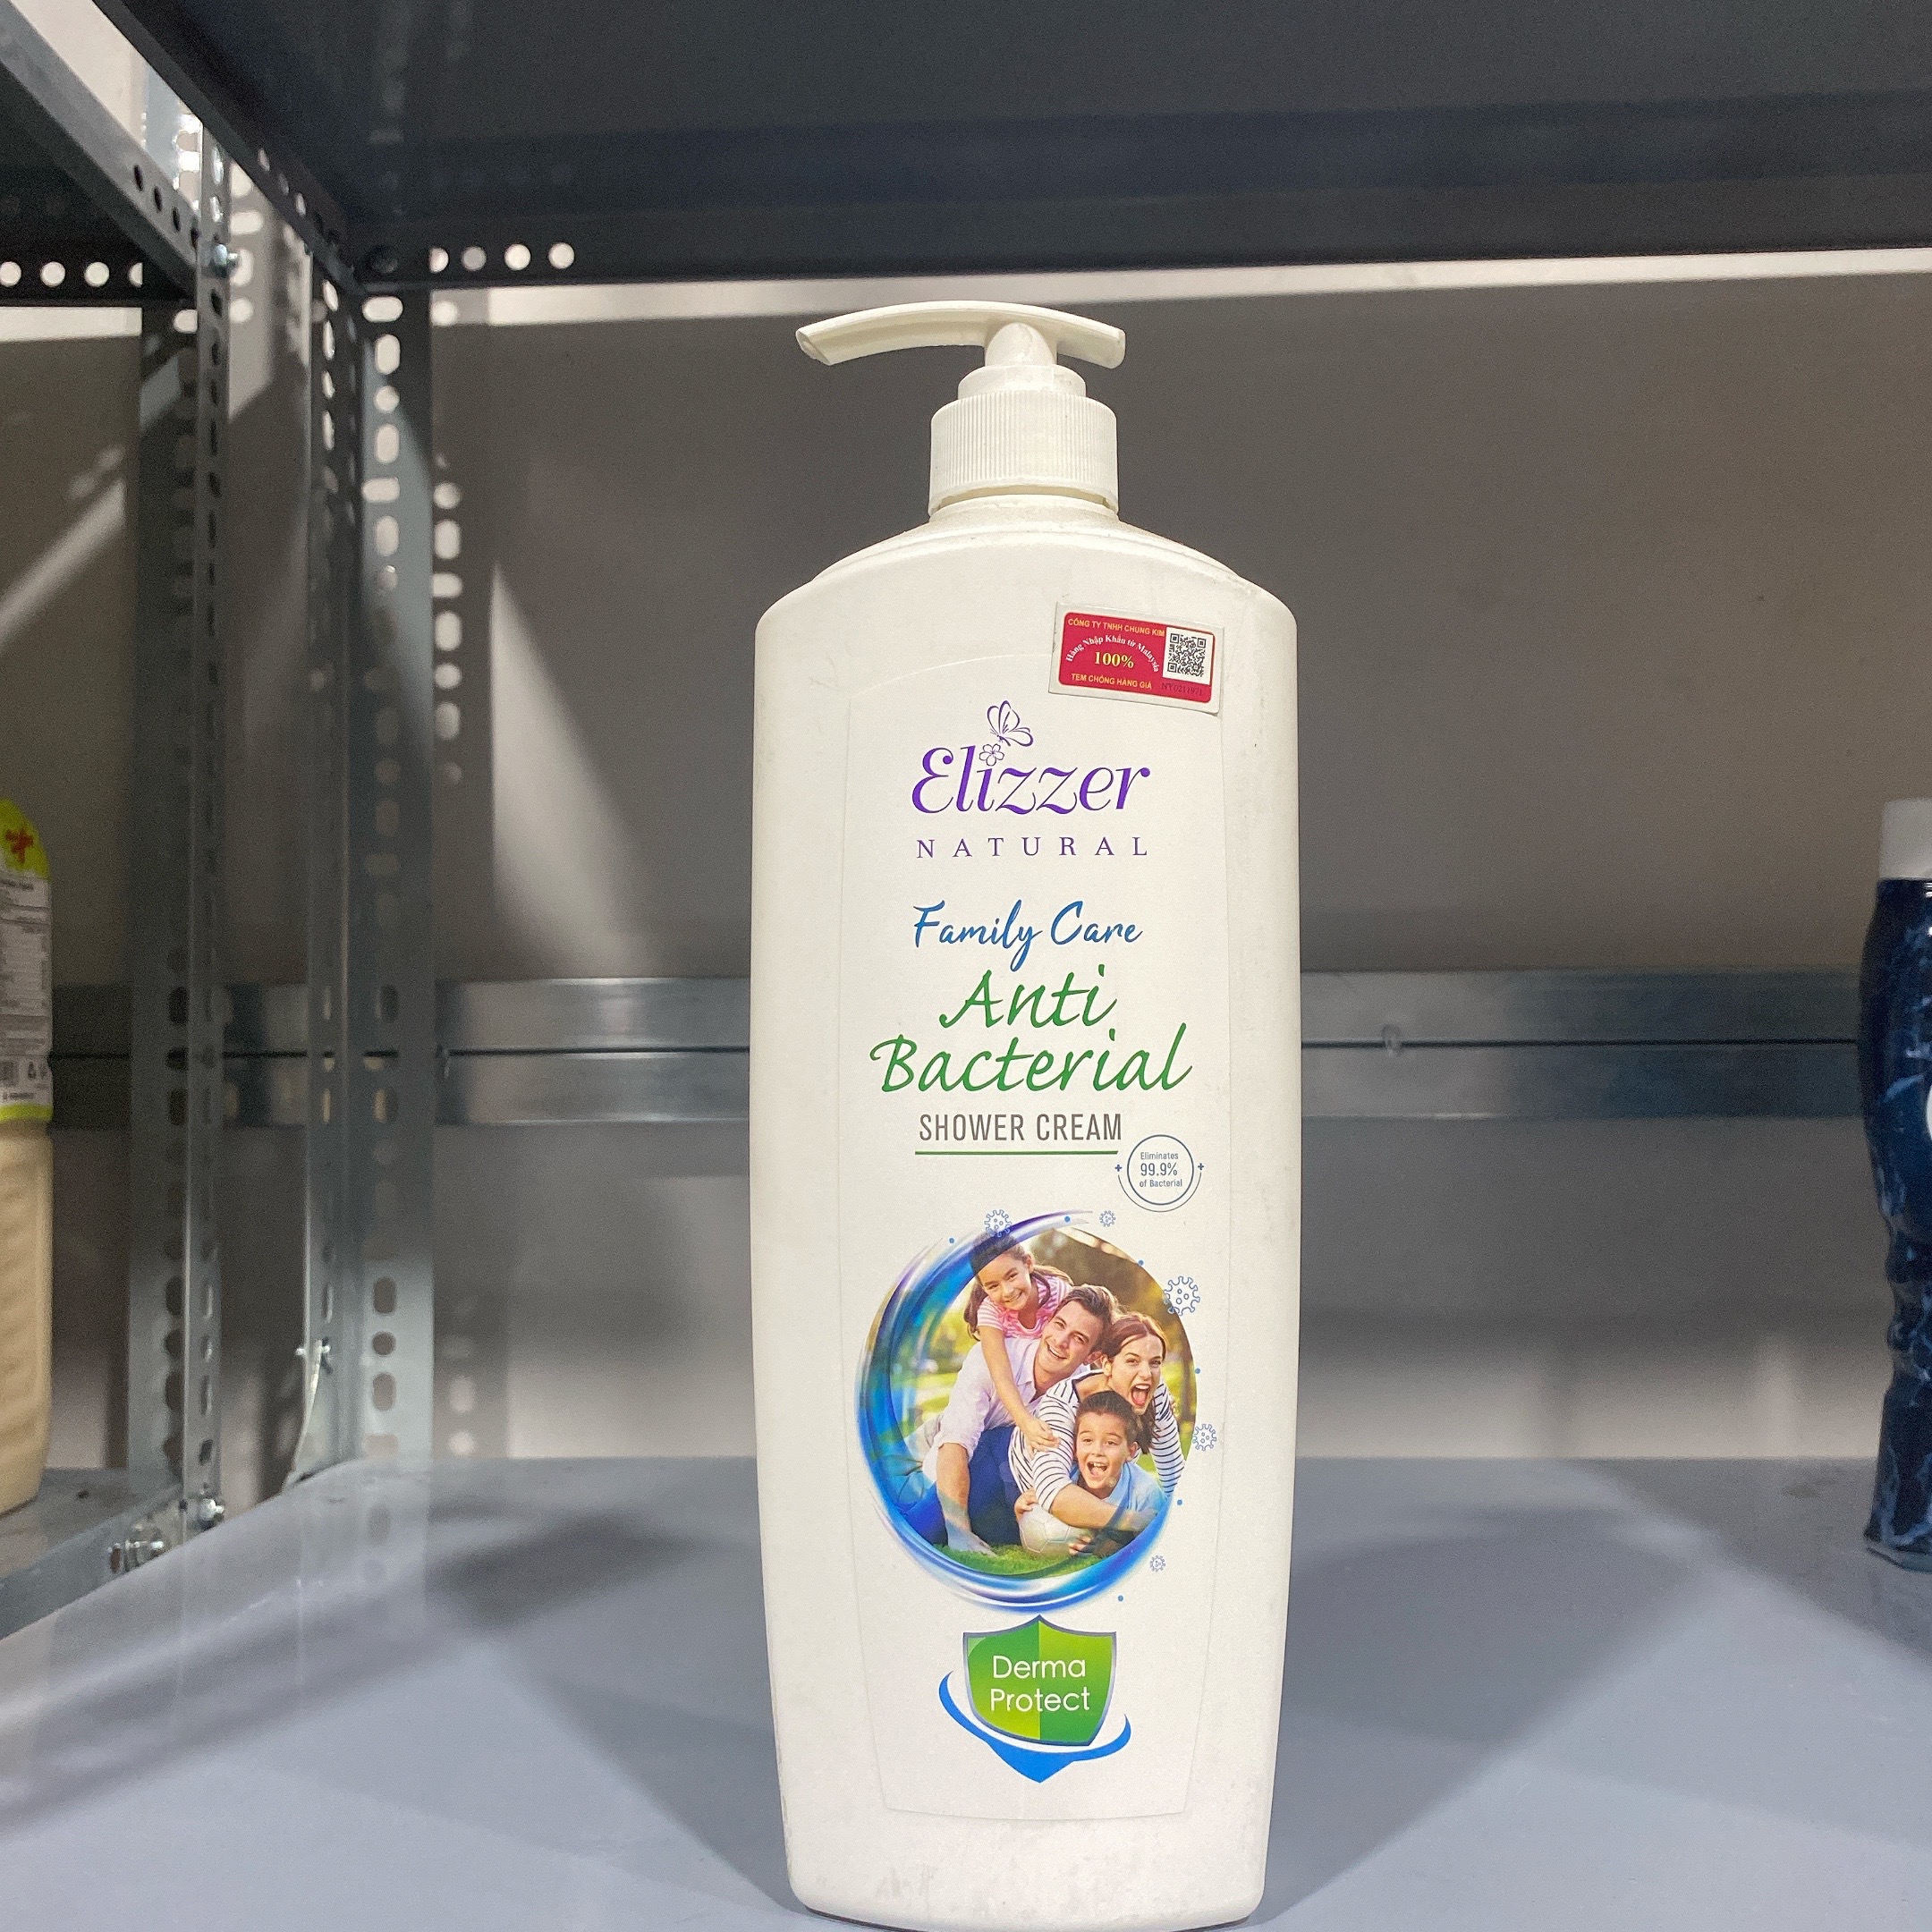 Sữa Tắm Kháng Khuẩn Elizzer Family Care Anti Bacterial 1L